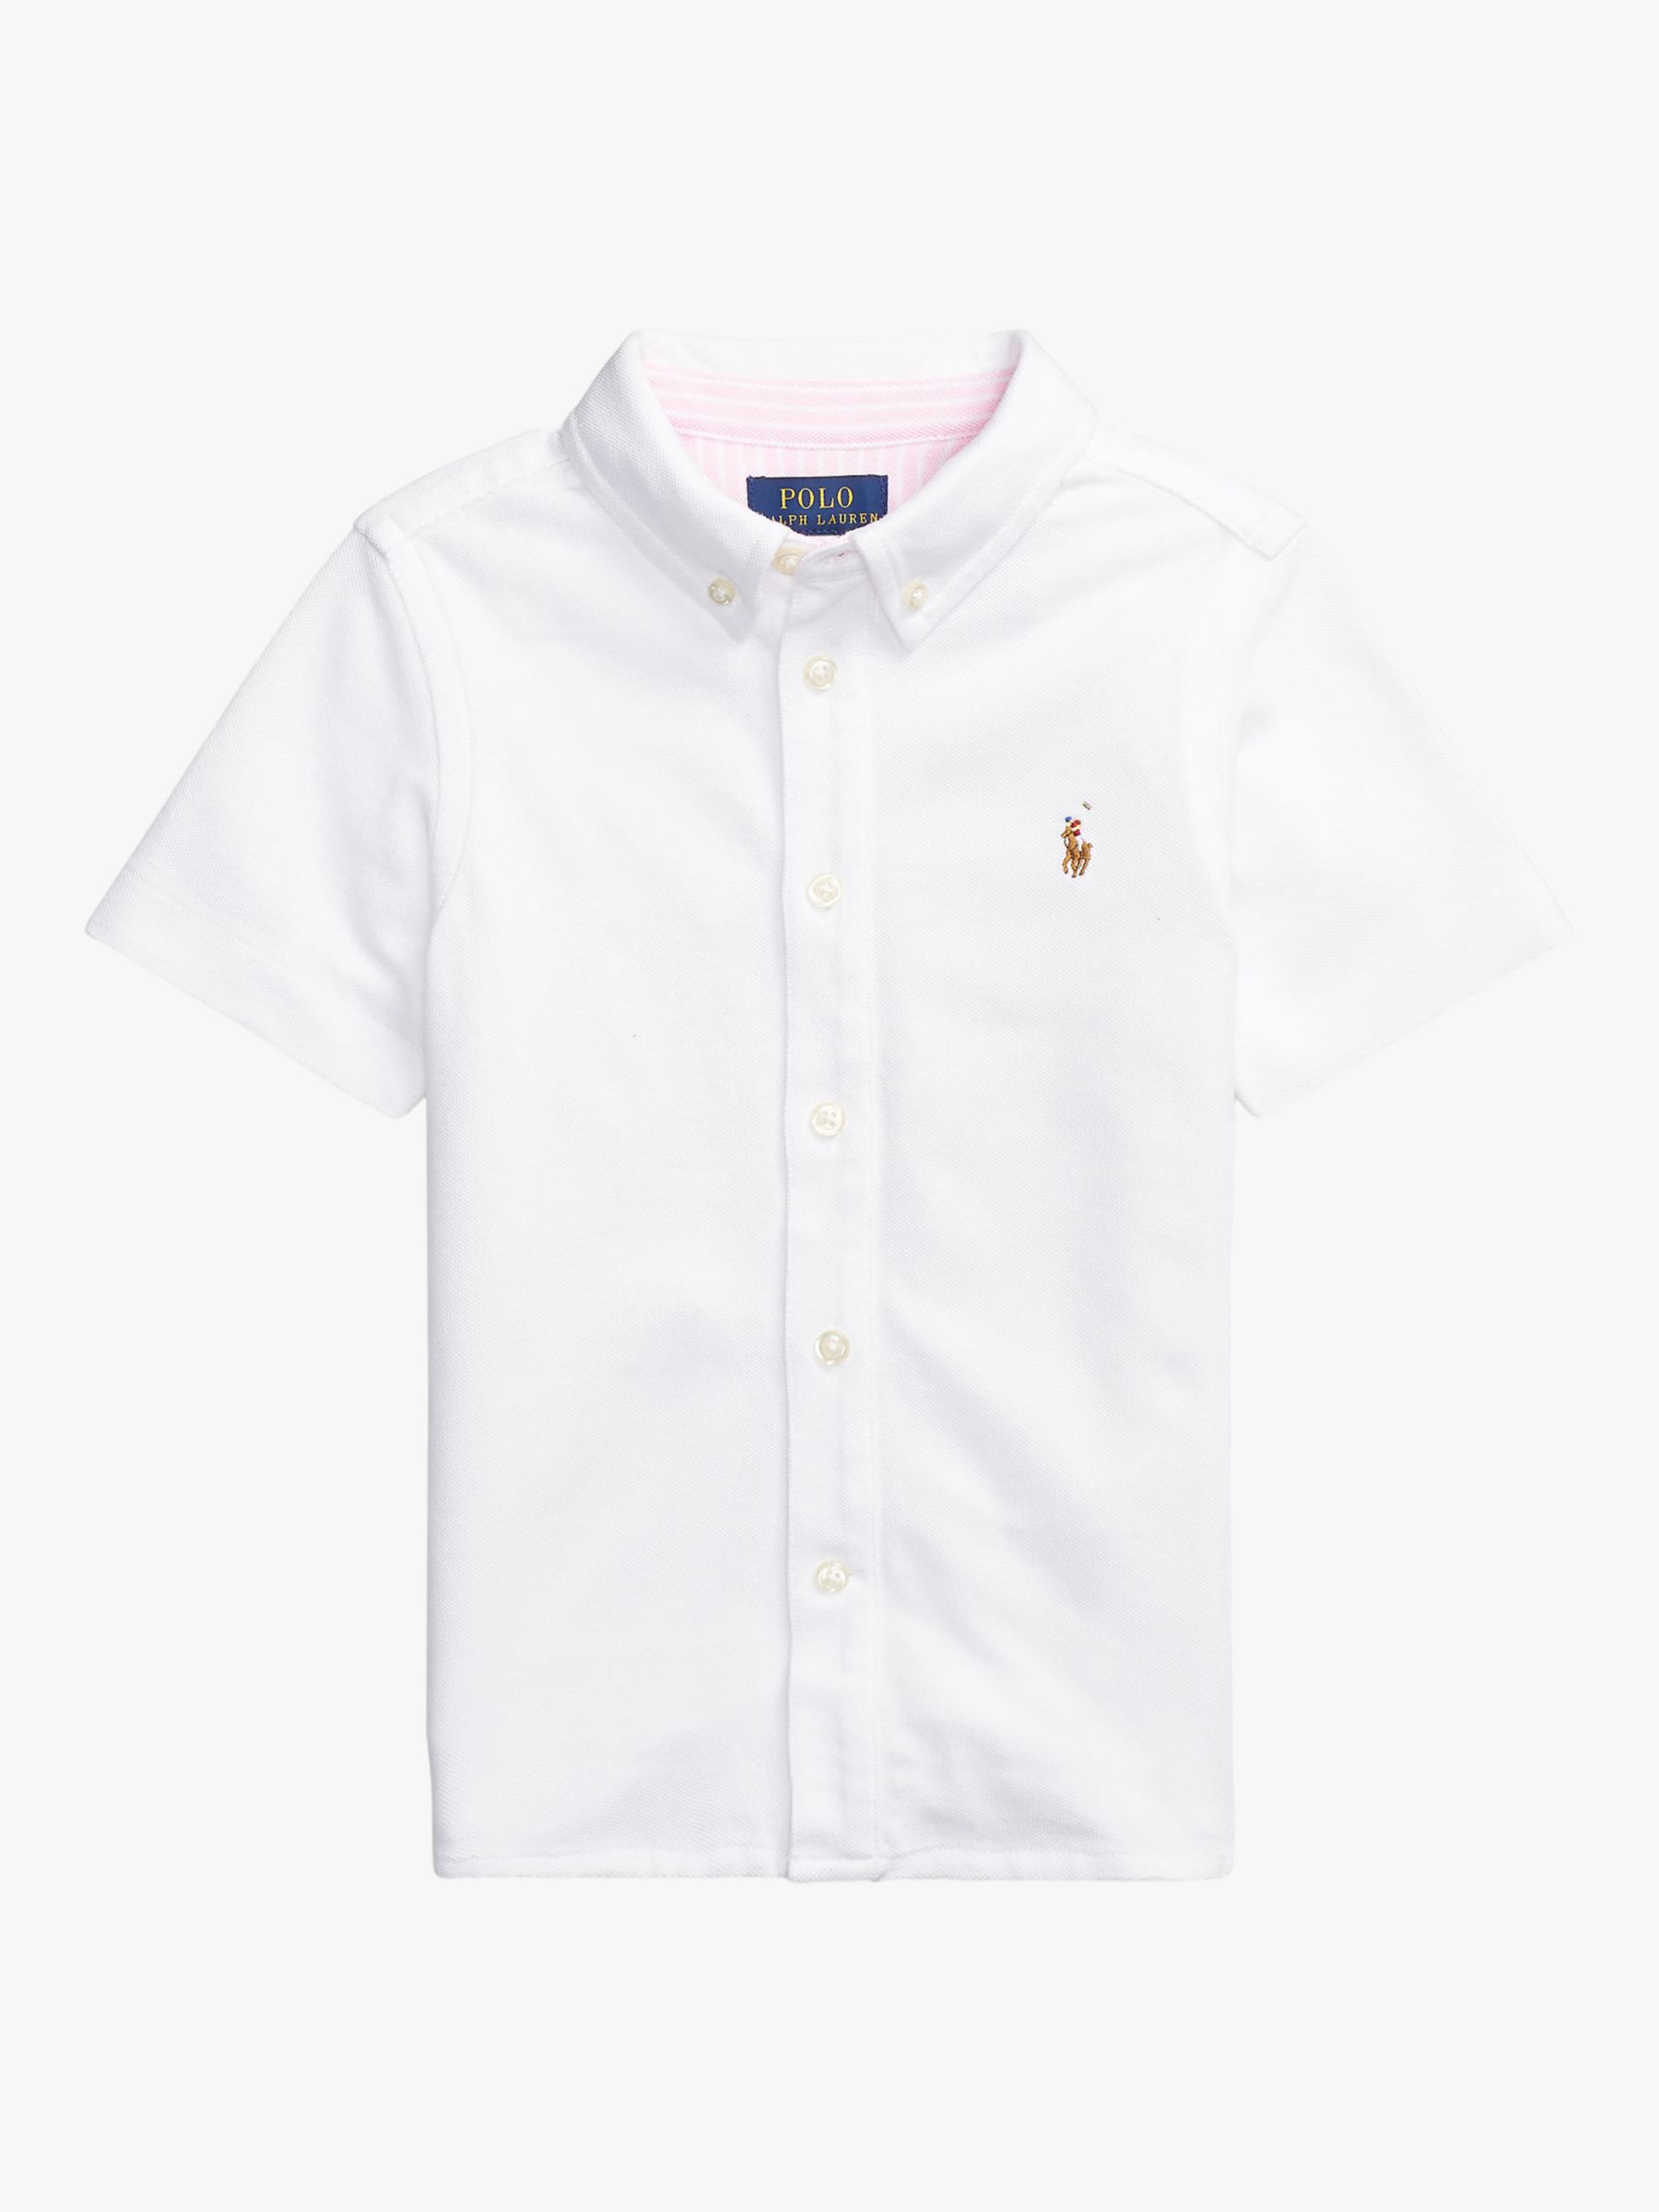 Polo Ralph Lauren Kids' Short Sleeve Shirt, White